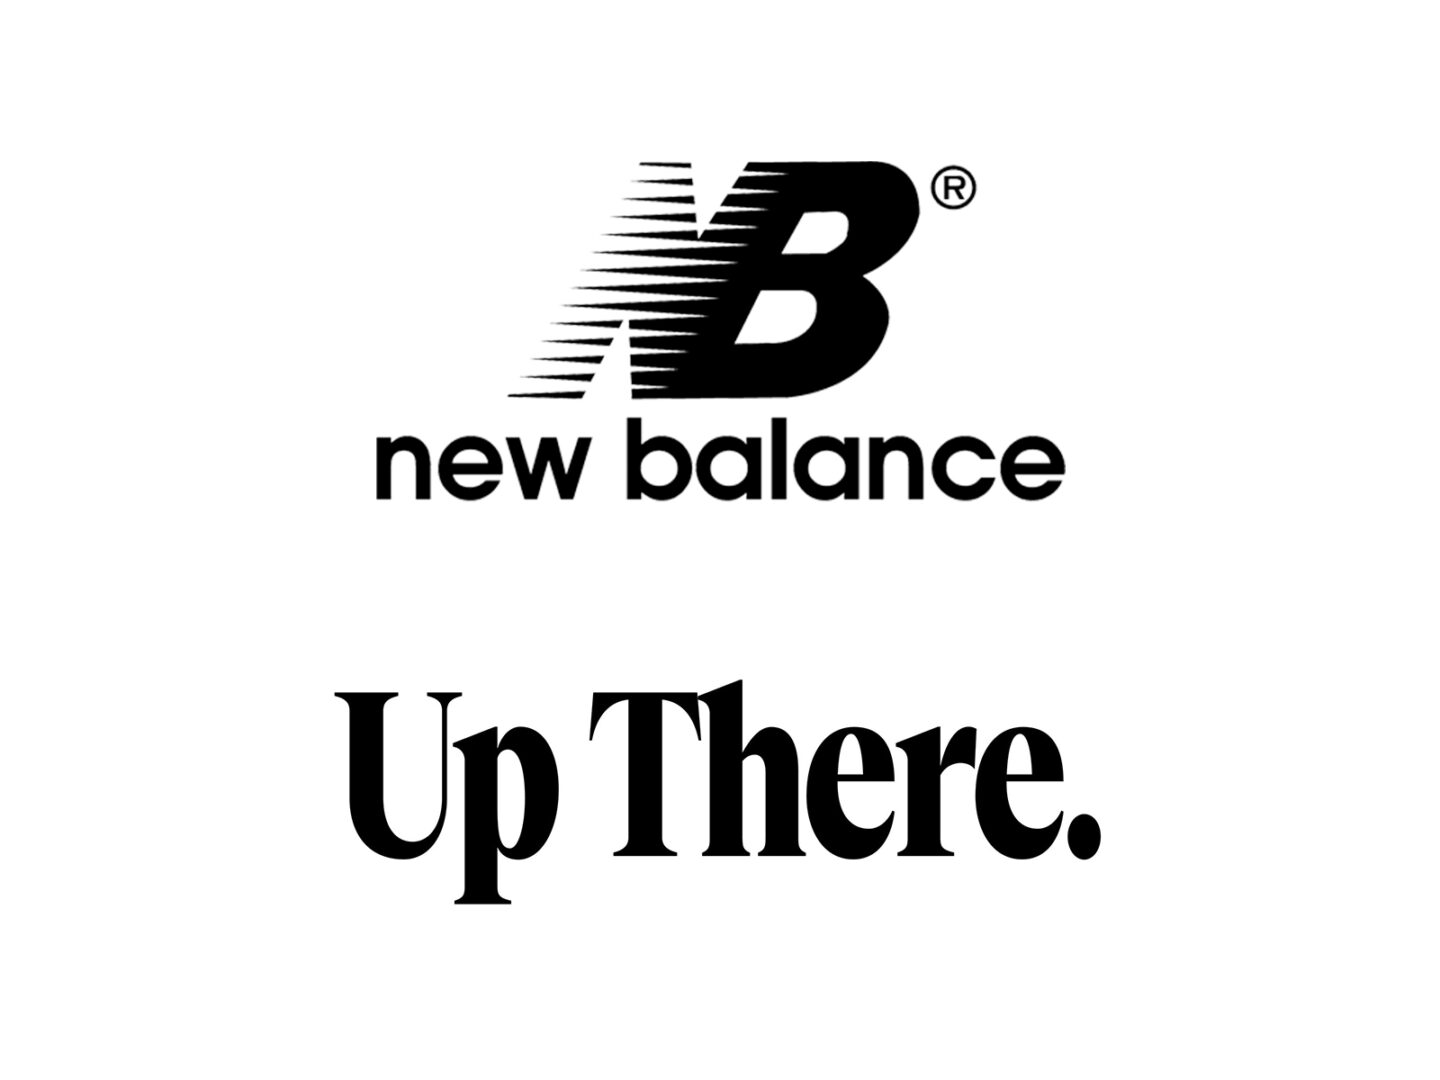 Primer vistazo a las New Balance x Up There 1906D